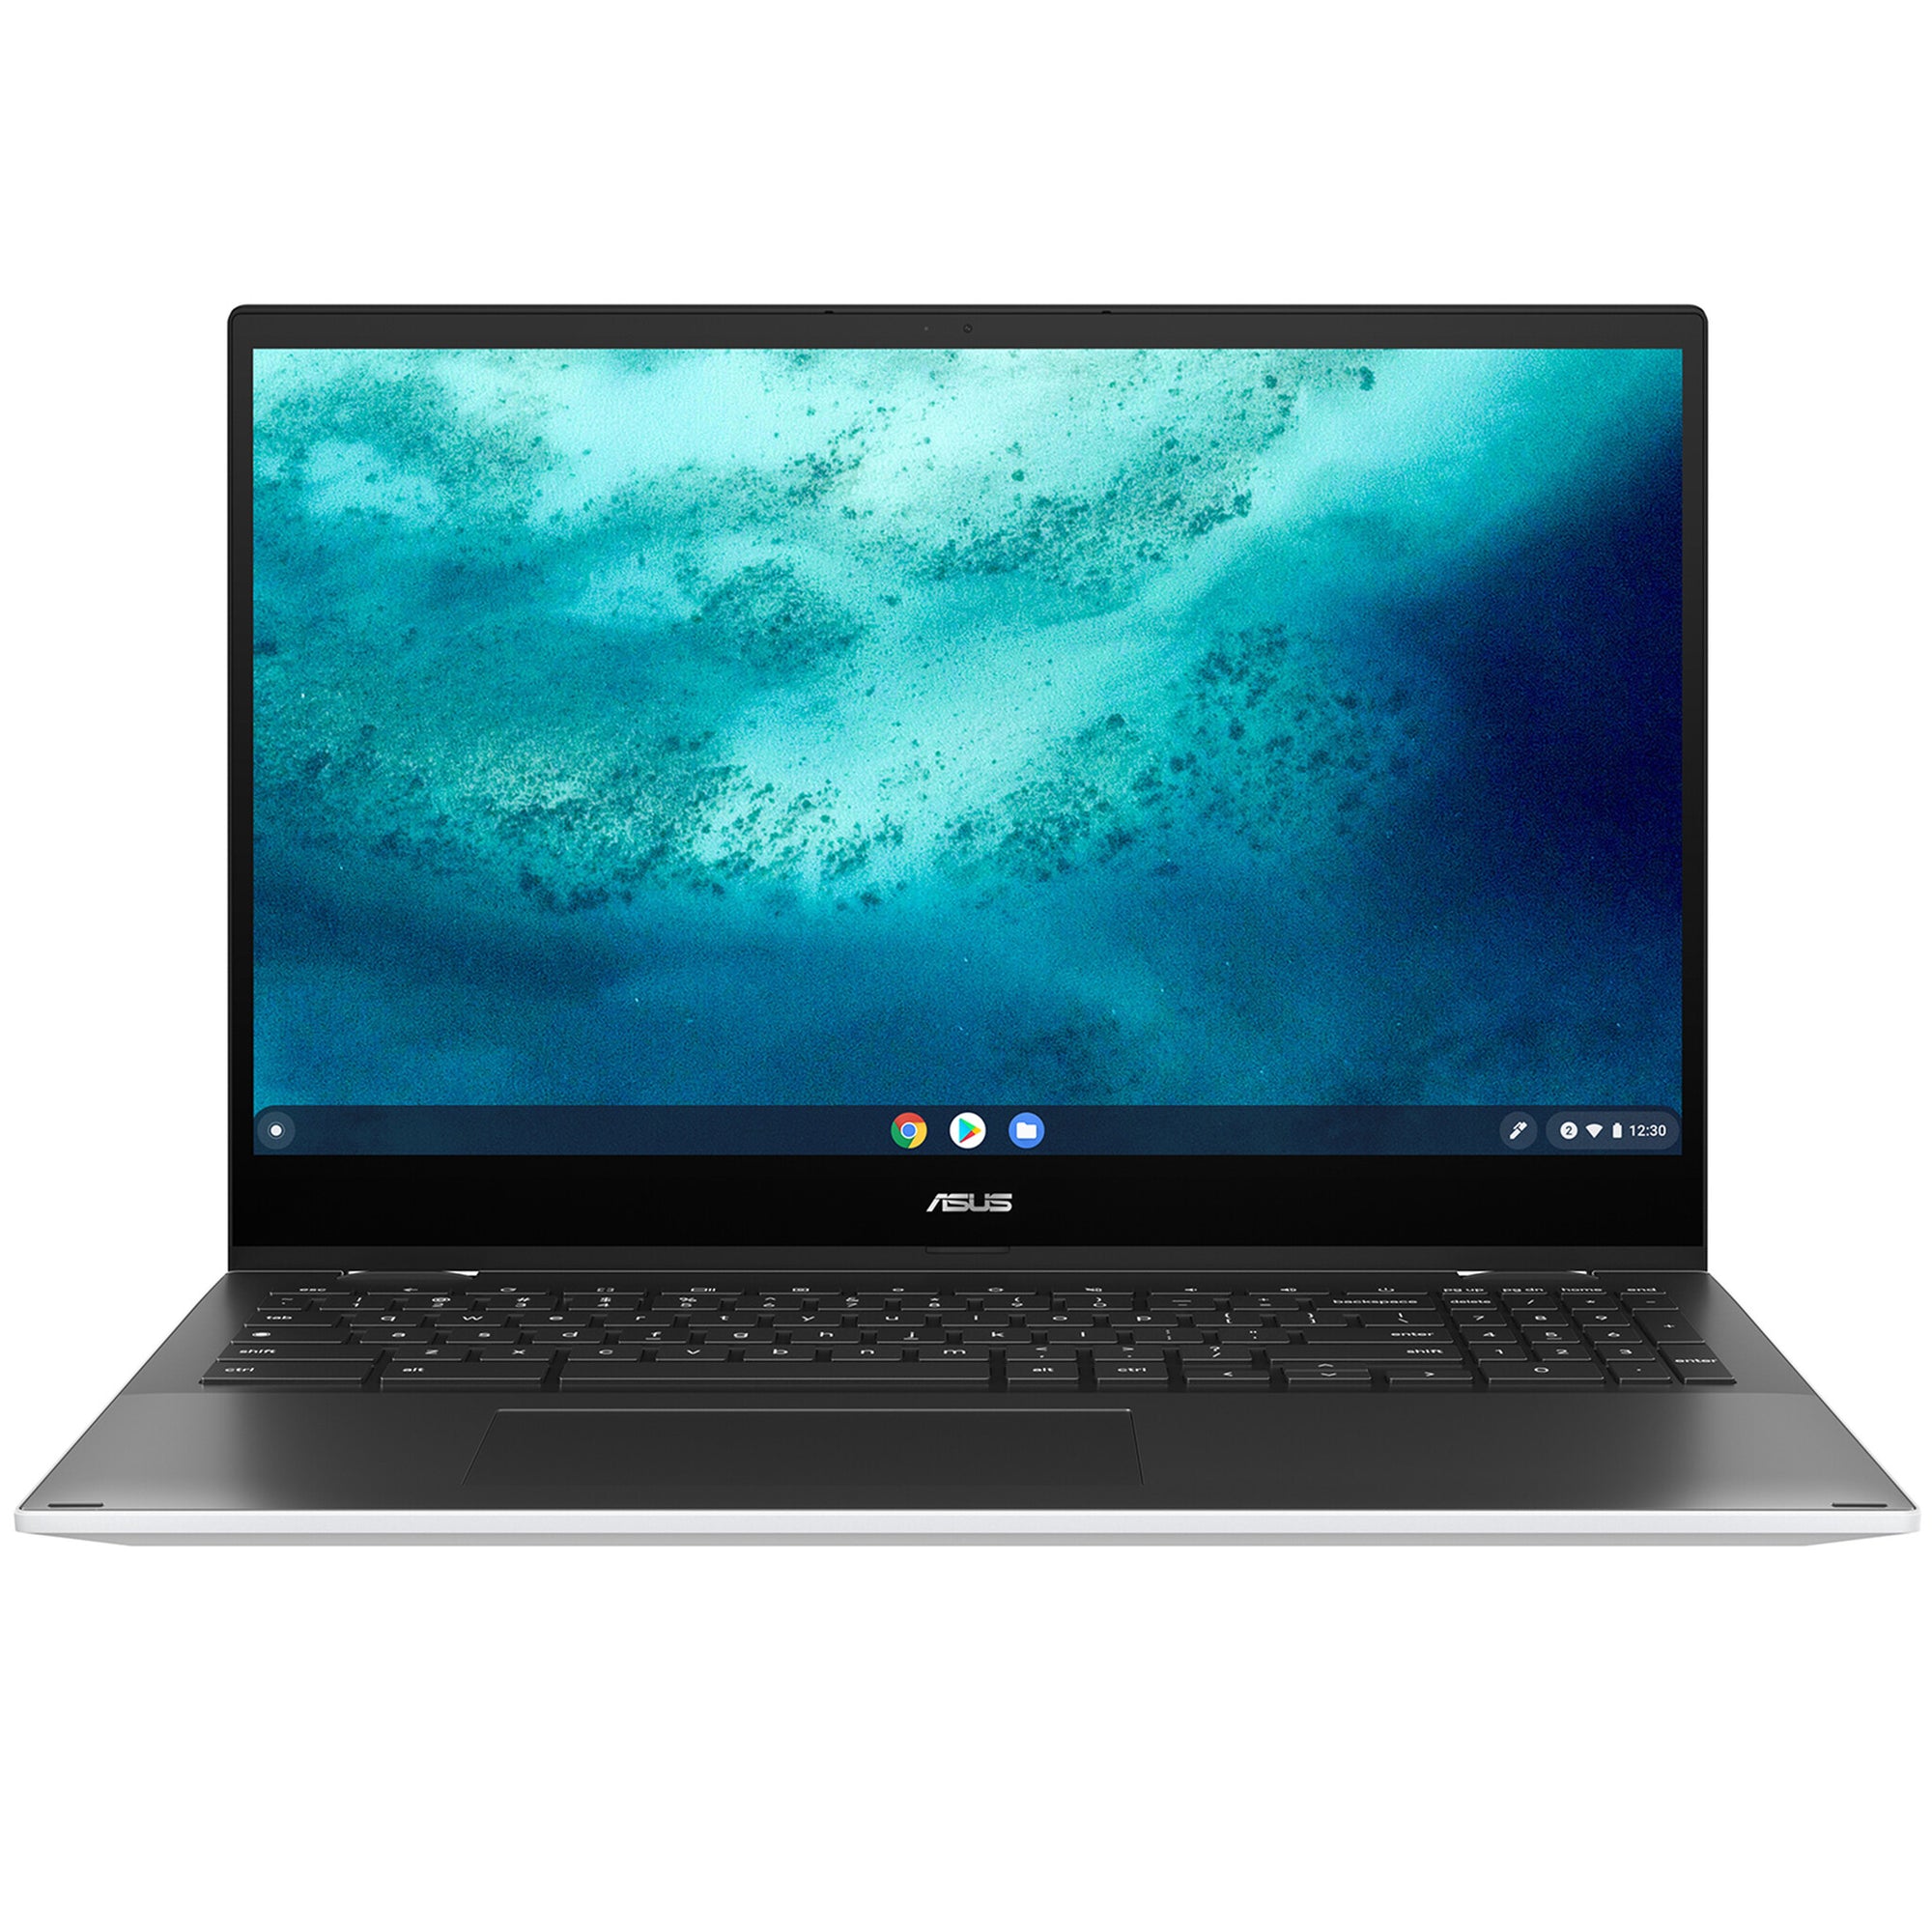 Laptops - Chromebooks - Clove Technology